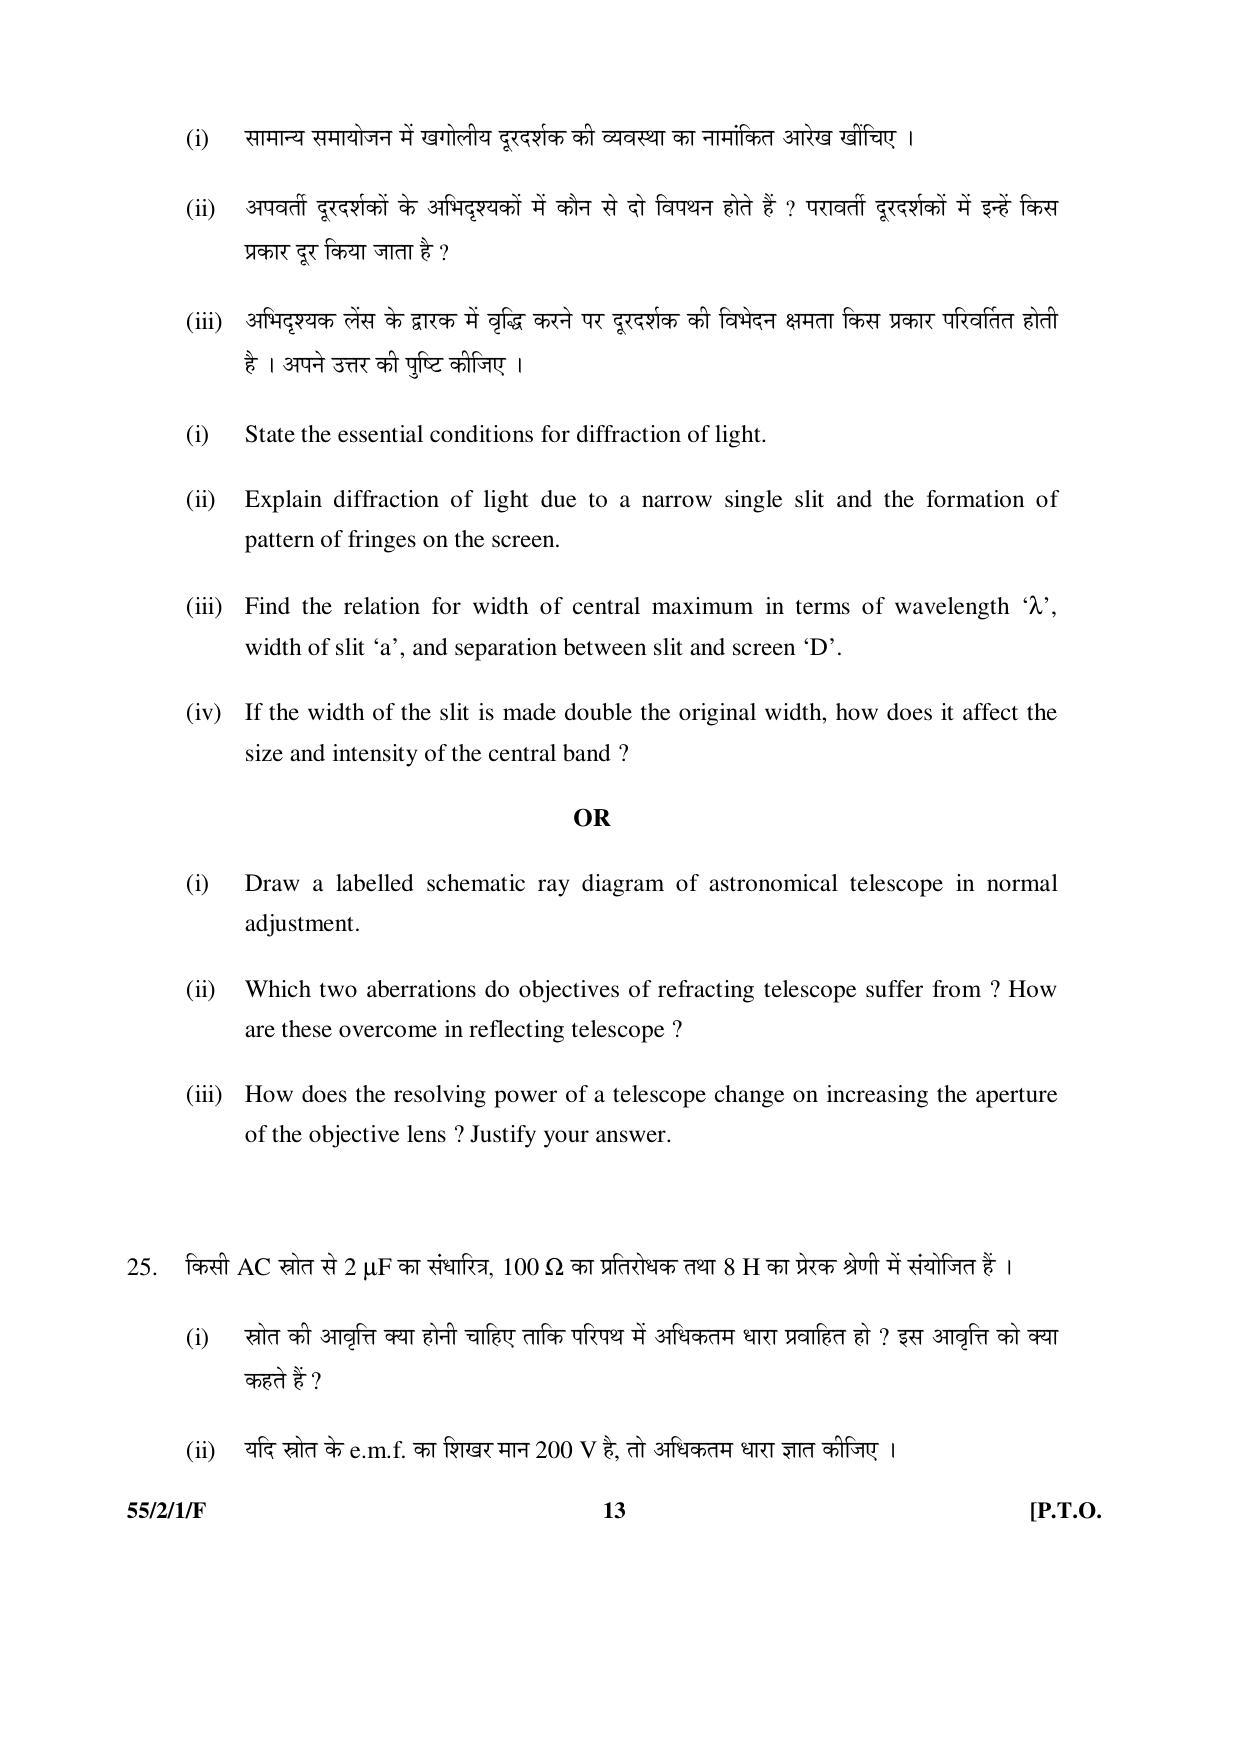 CBSE Class 12 55-2-1-F _Physics_SET-1 2016 Question Paper - Page 13